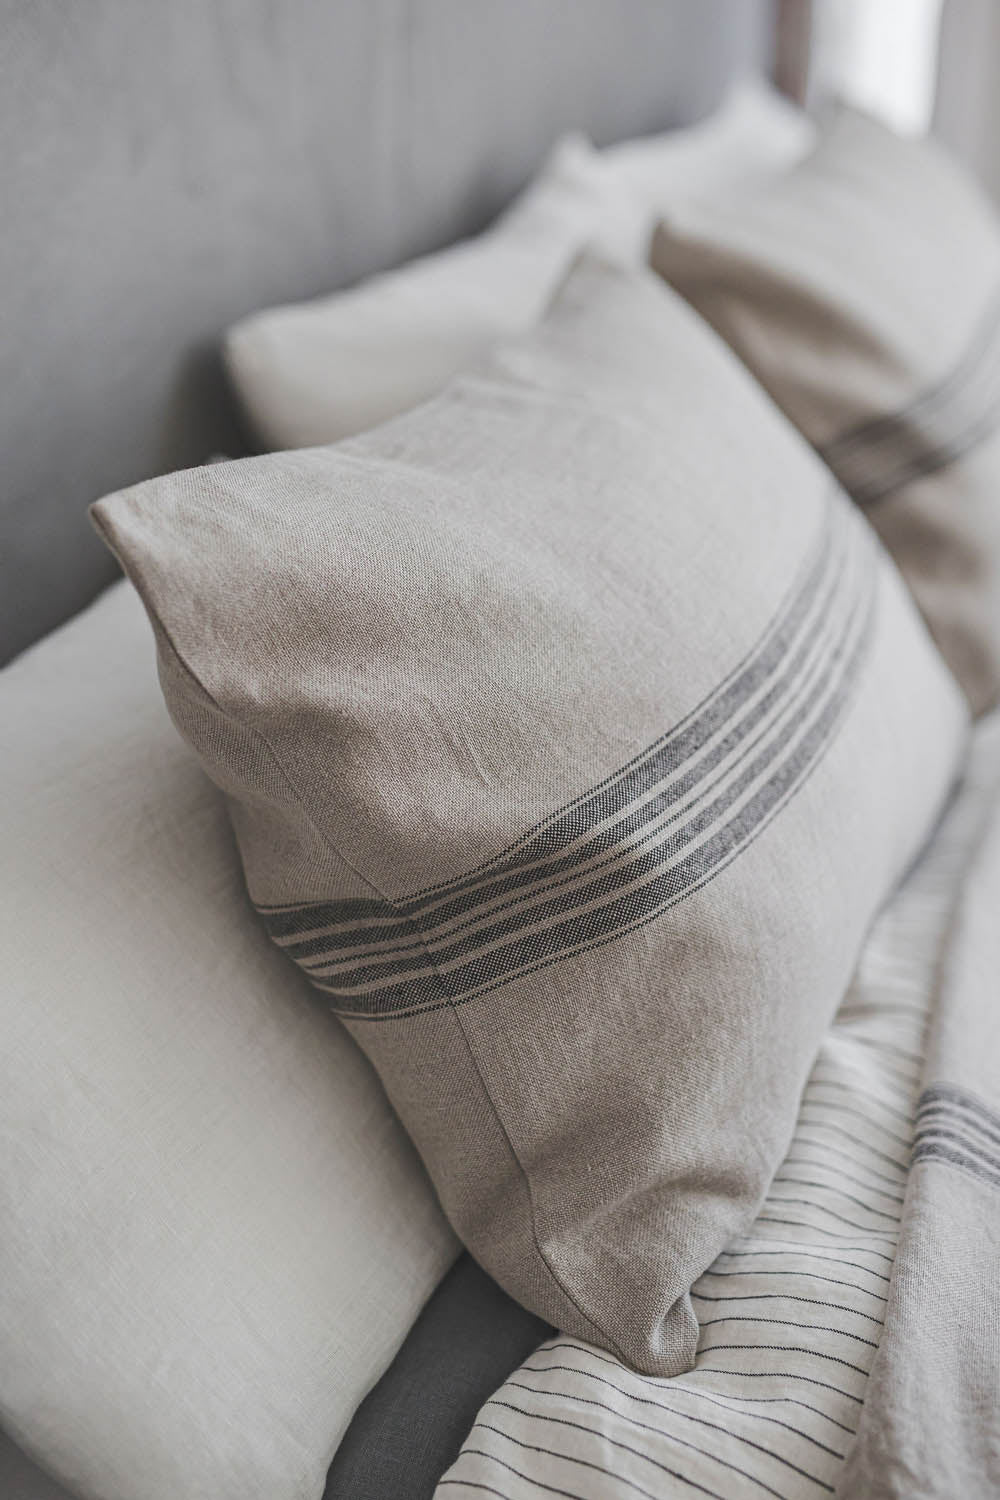 Rustic linen lumbar pillowcase with black stripes